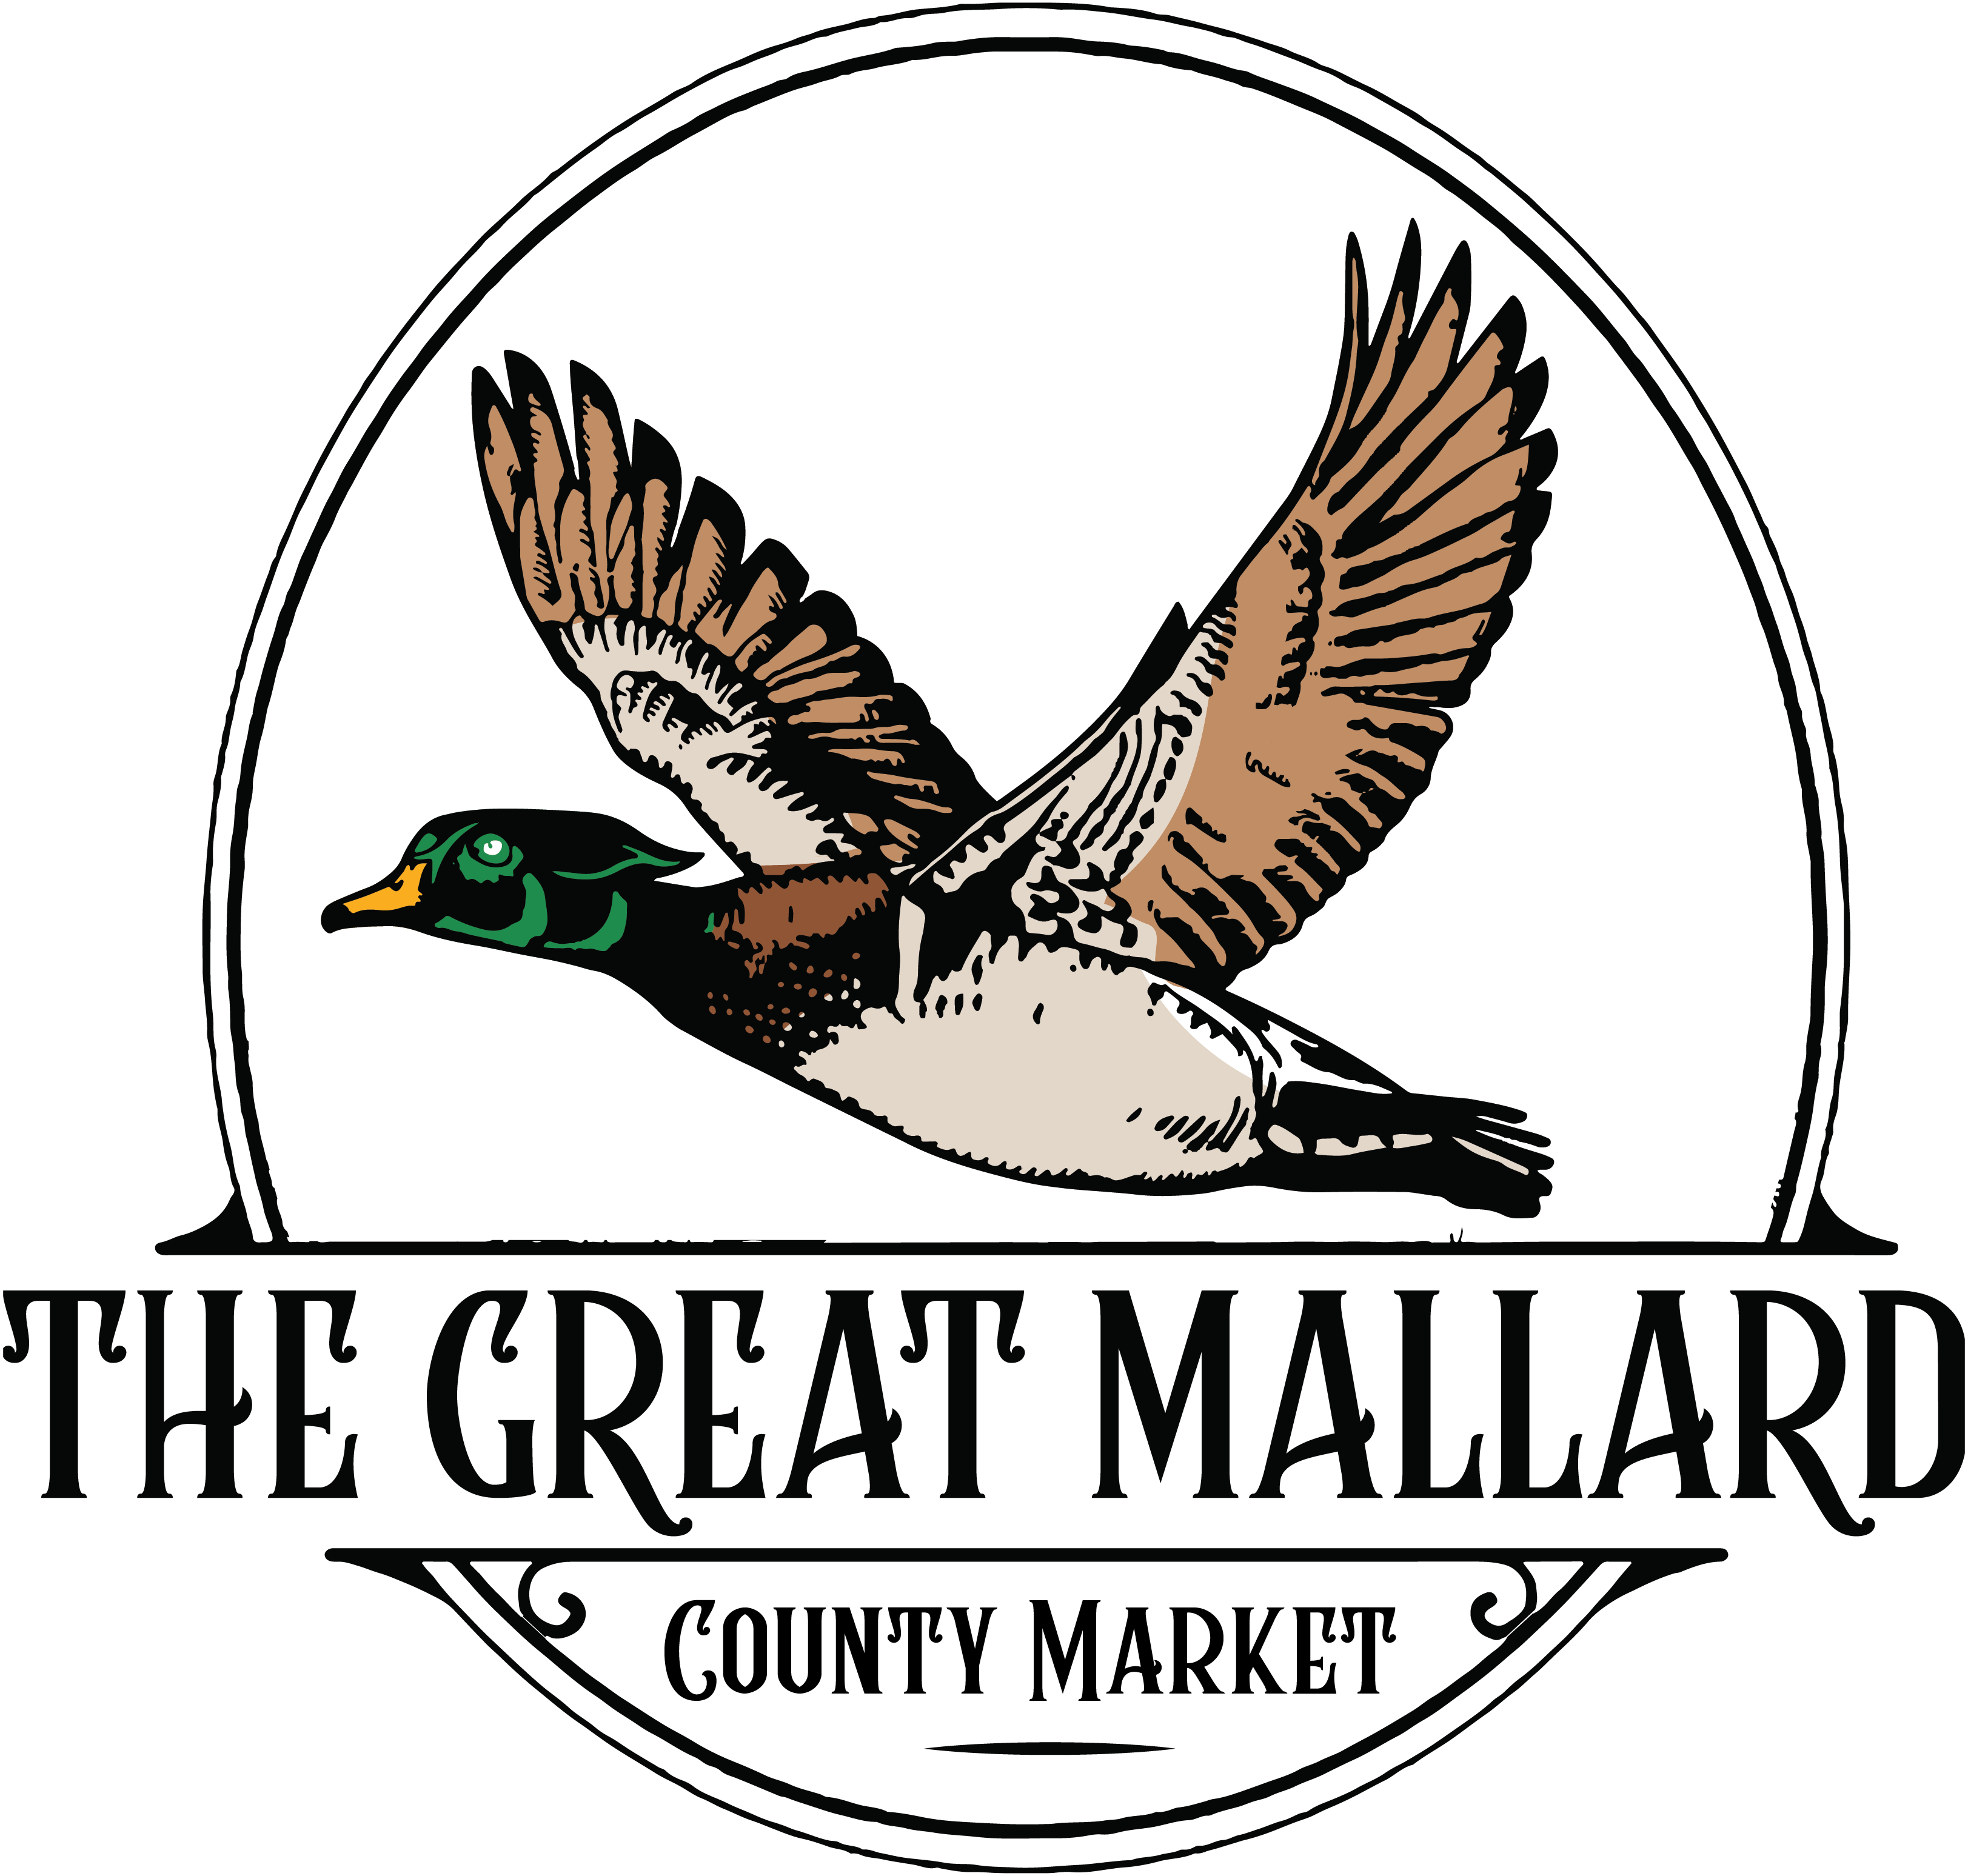 The Great Mallard